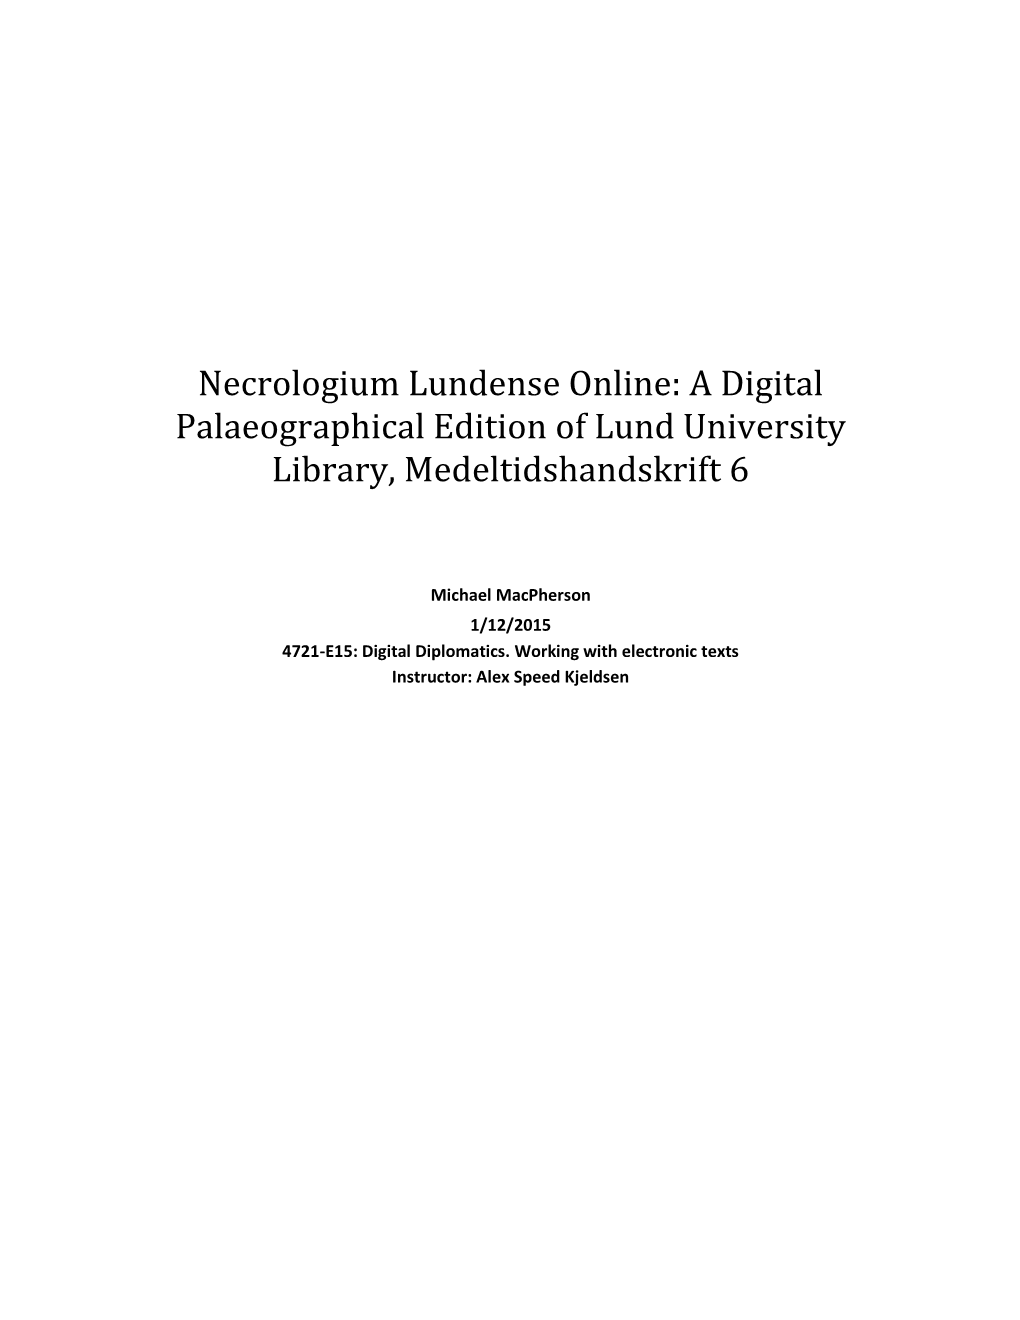 Necrologium Lundense Online: a Digital Palaeographical Edition of Lund University Library, Medeltidshandskrift 6